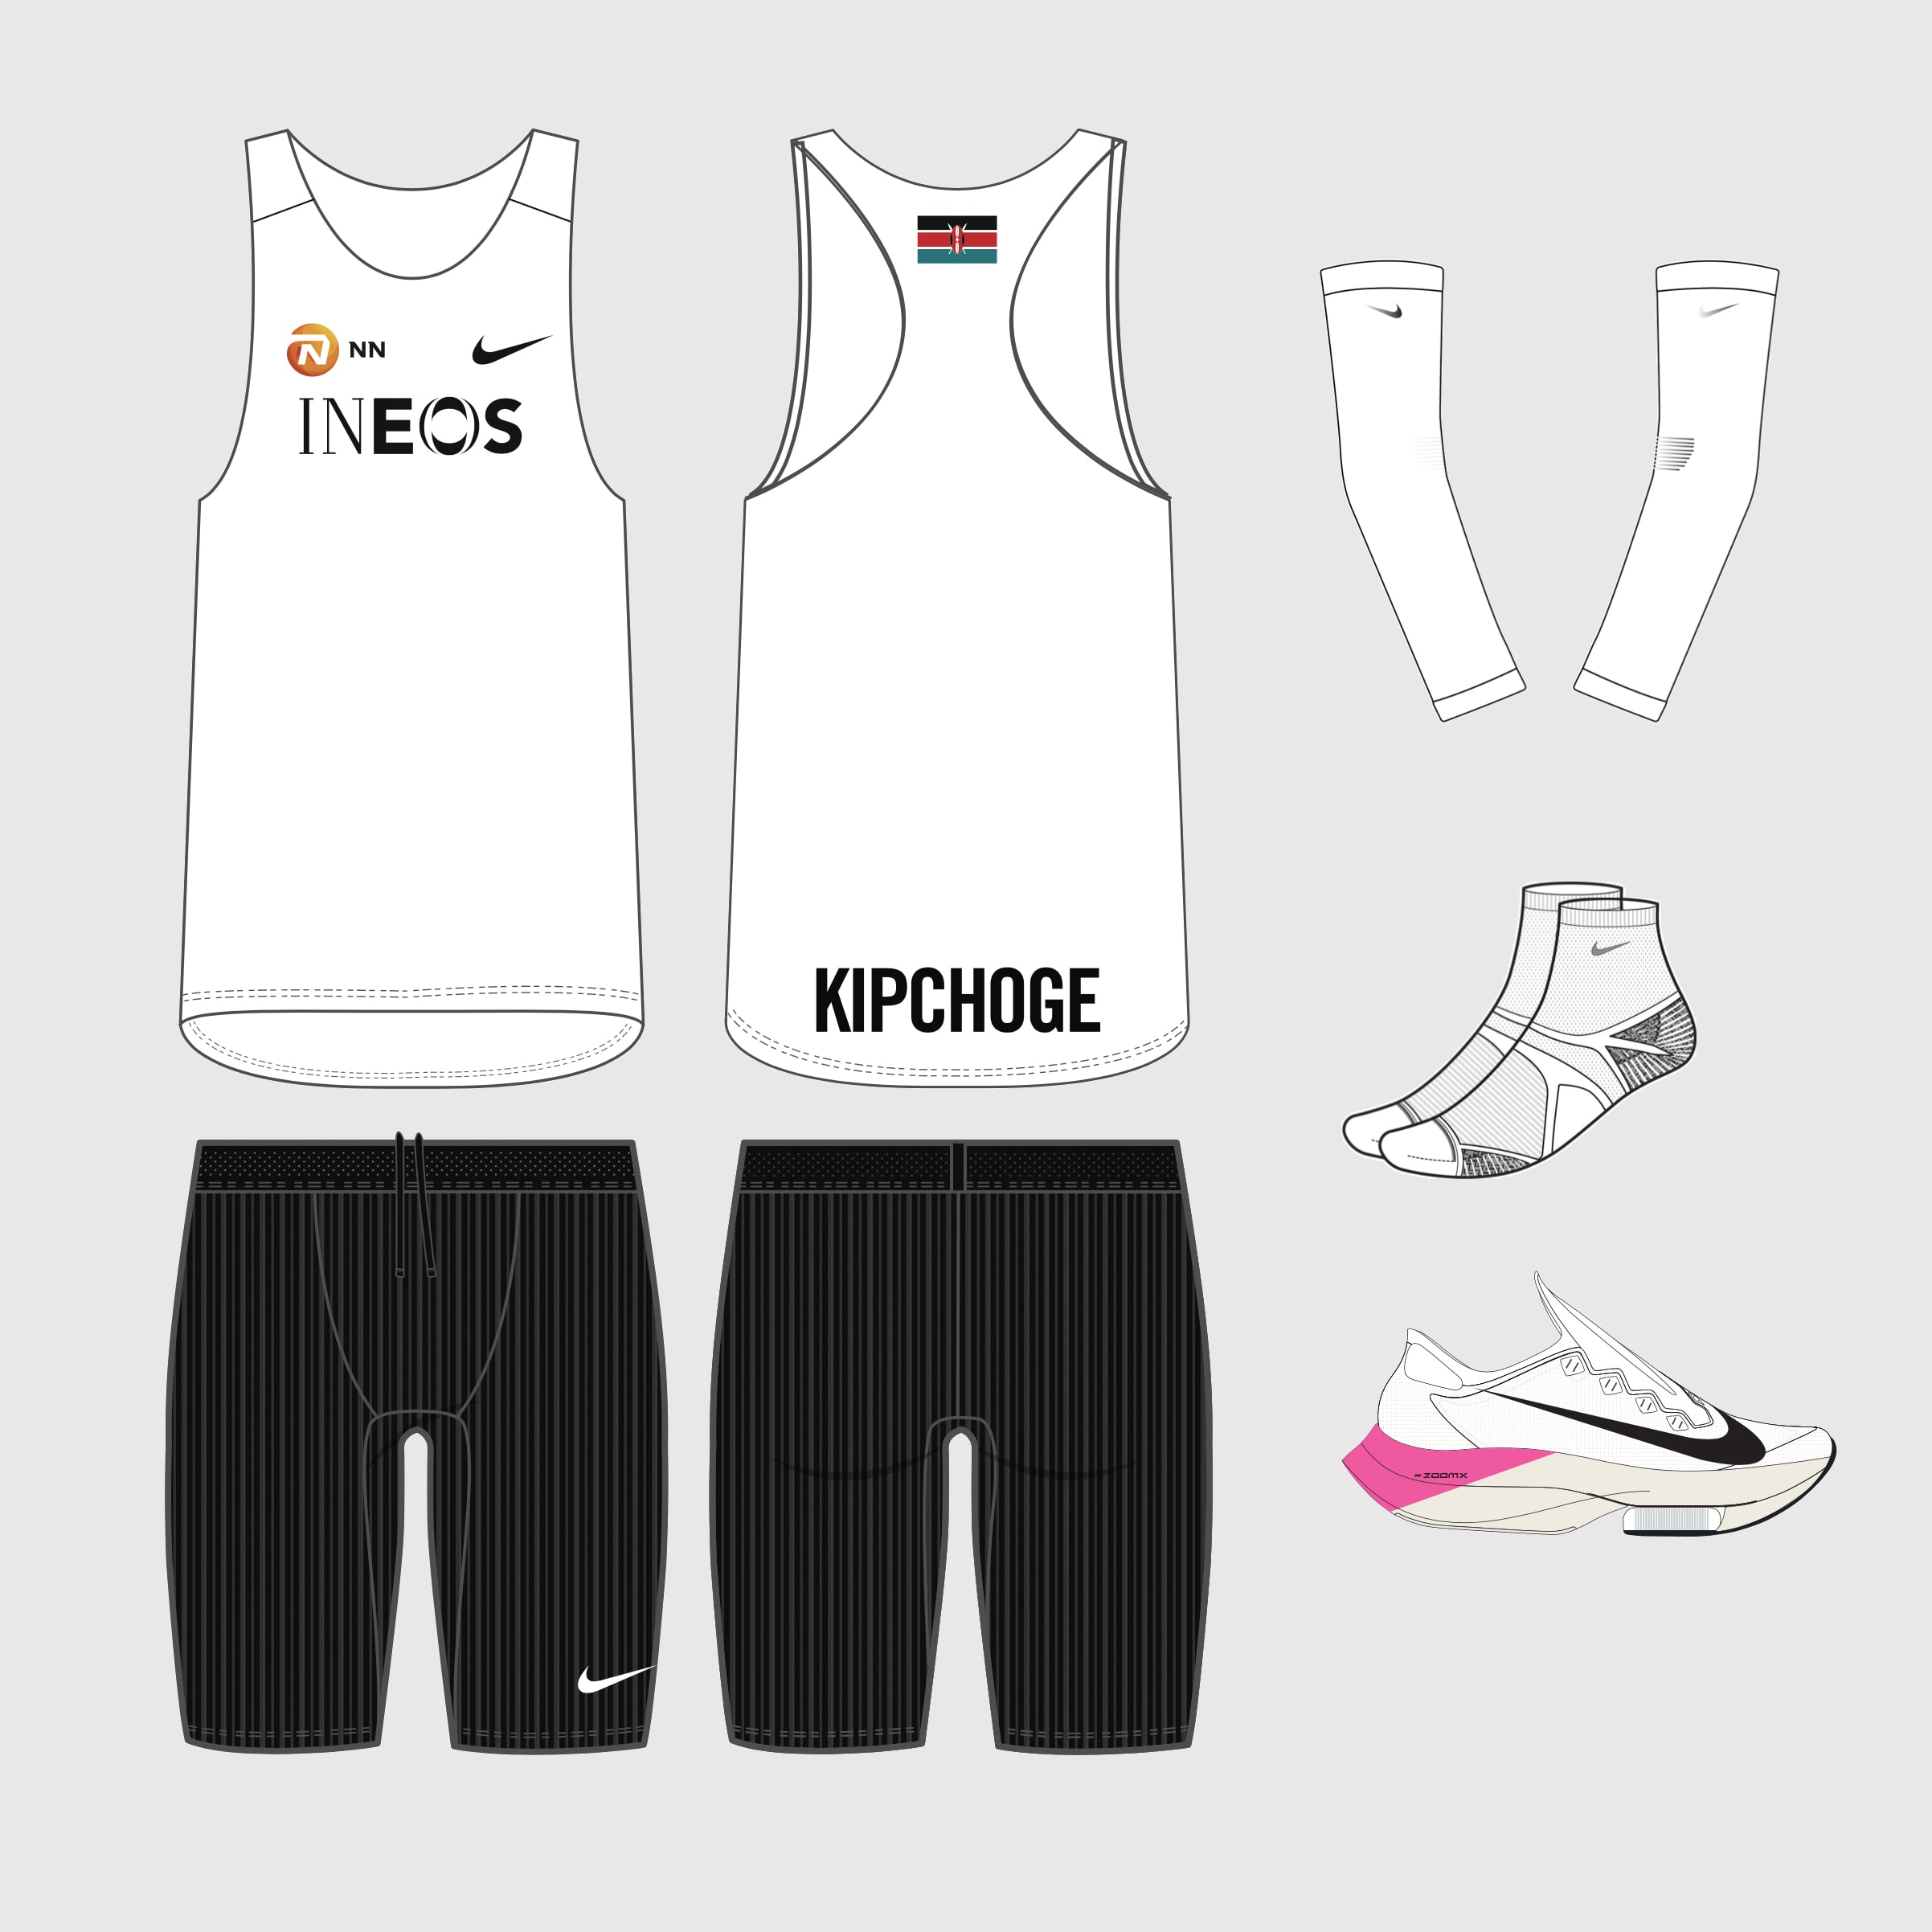 Eliud Kipchoge 1:59 Run Nike Next% Sneaker | Collector